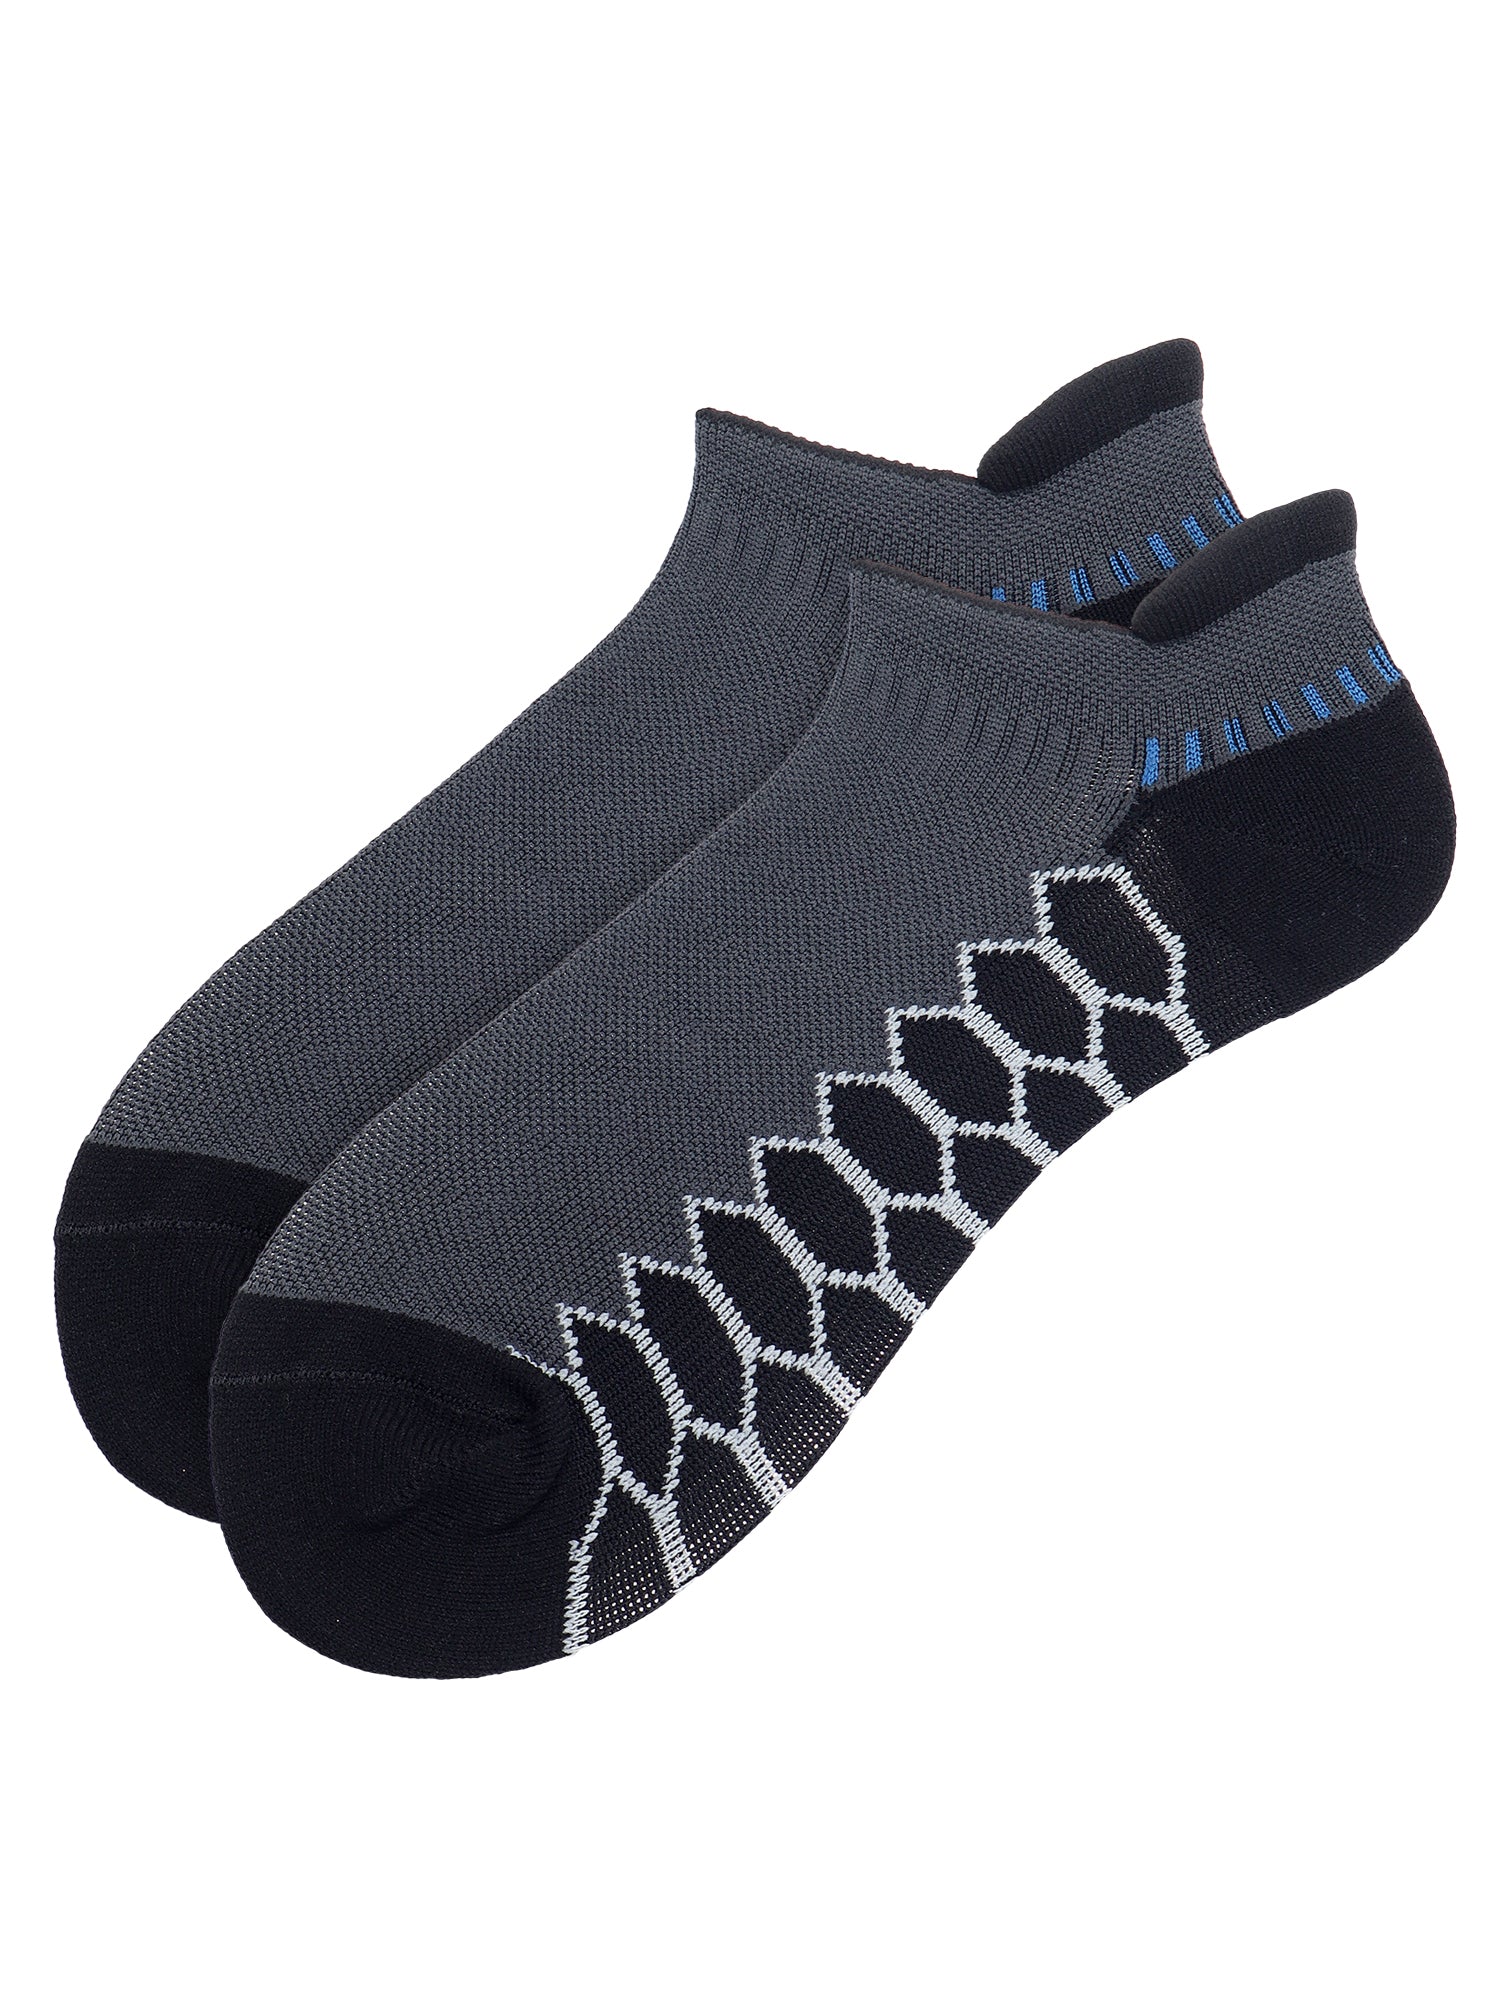 Performax | The Jock Sock | Ultimate Box Of 8 Pairs | Low Cut Sports Socks